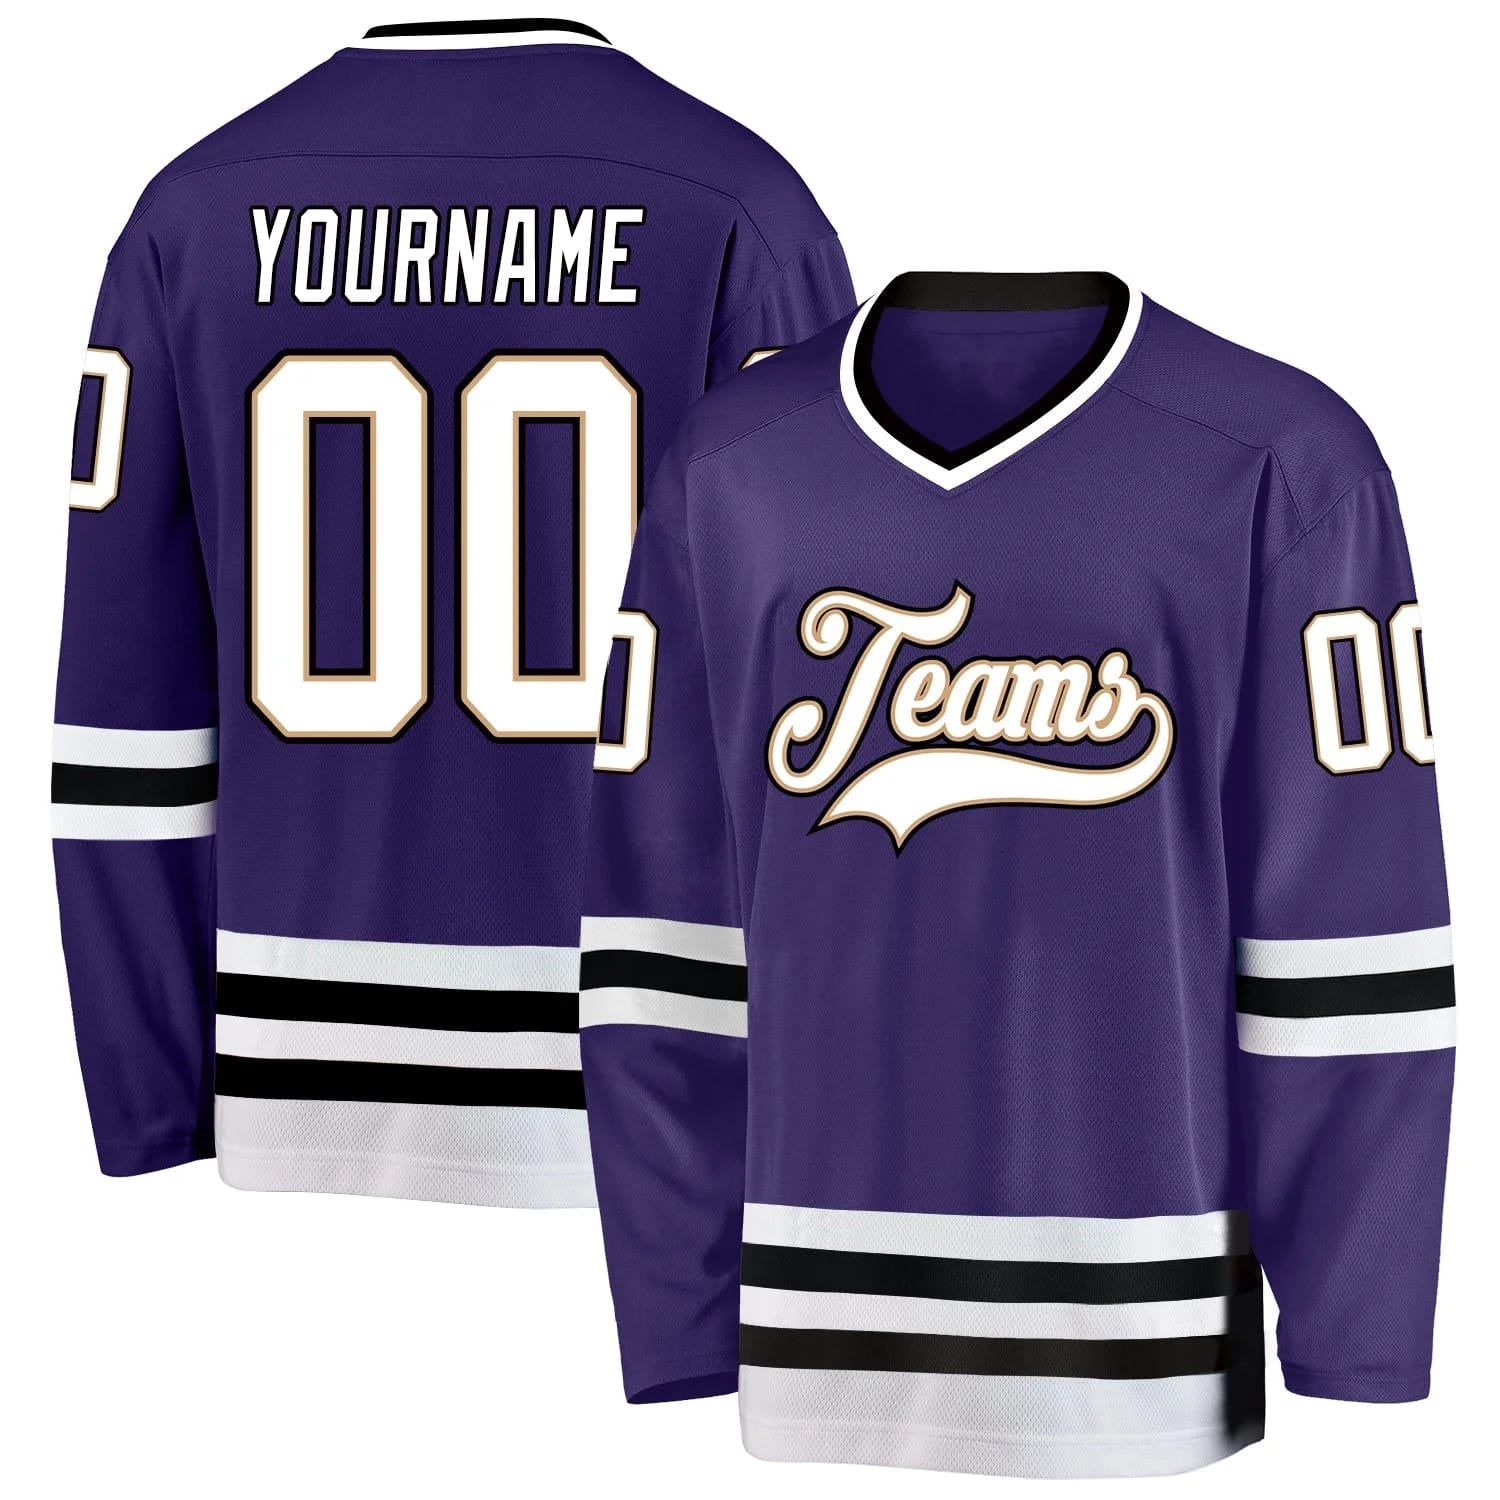 Stitched And Print Purple White-Black Hockey Jersey Custom